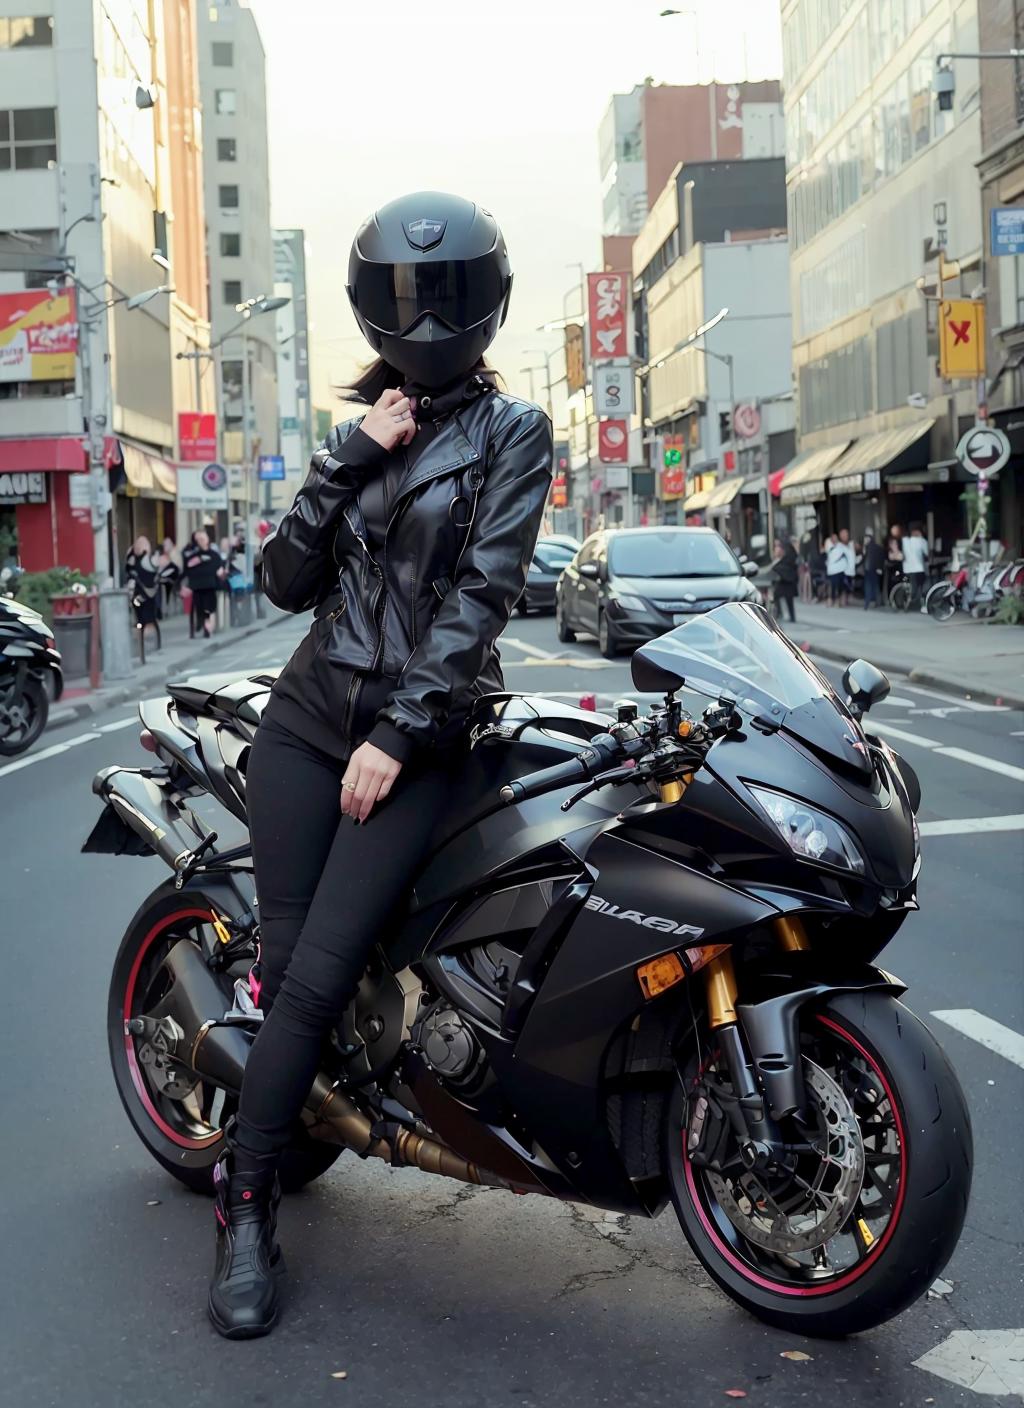 Motorbike EX | Transportation LoRA image by YeHeAI